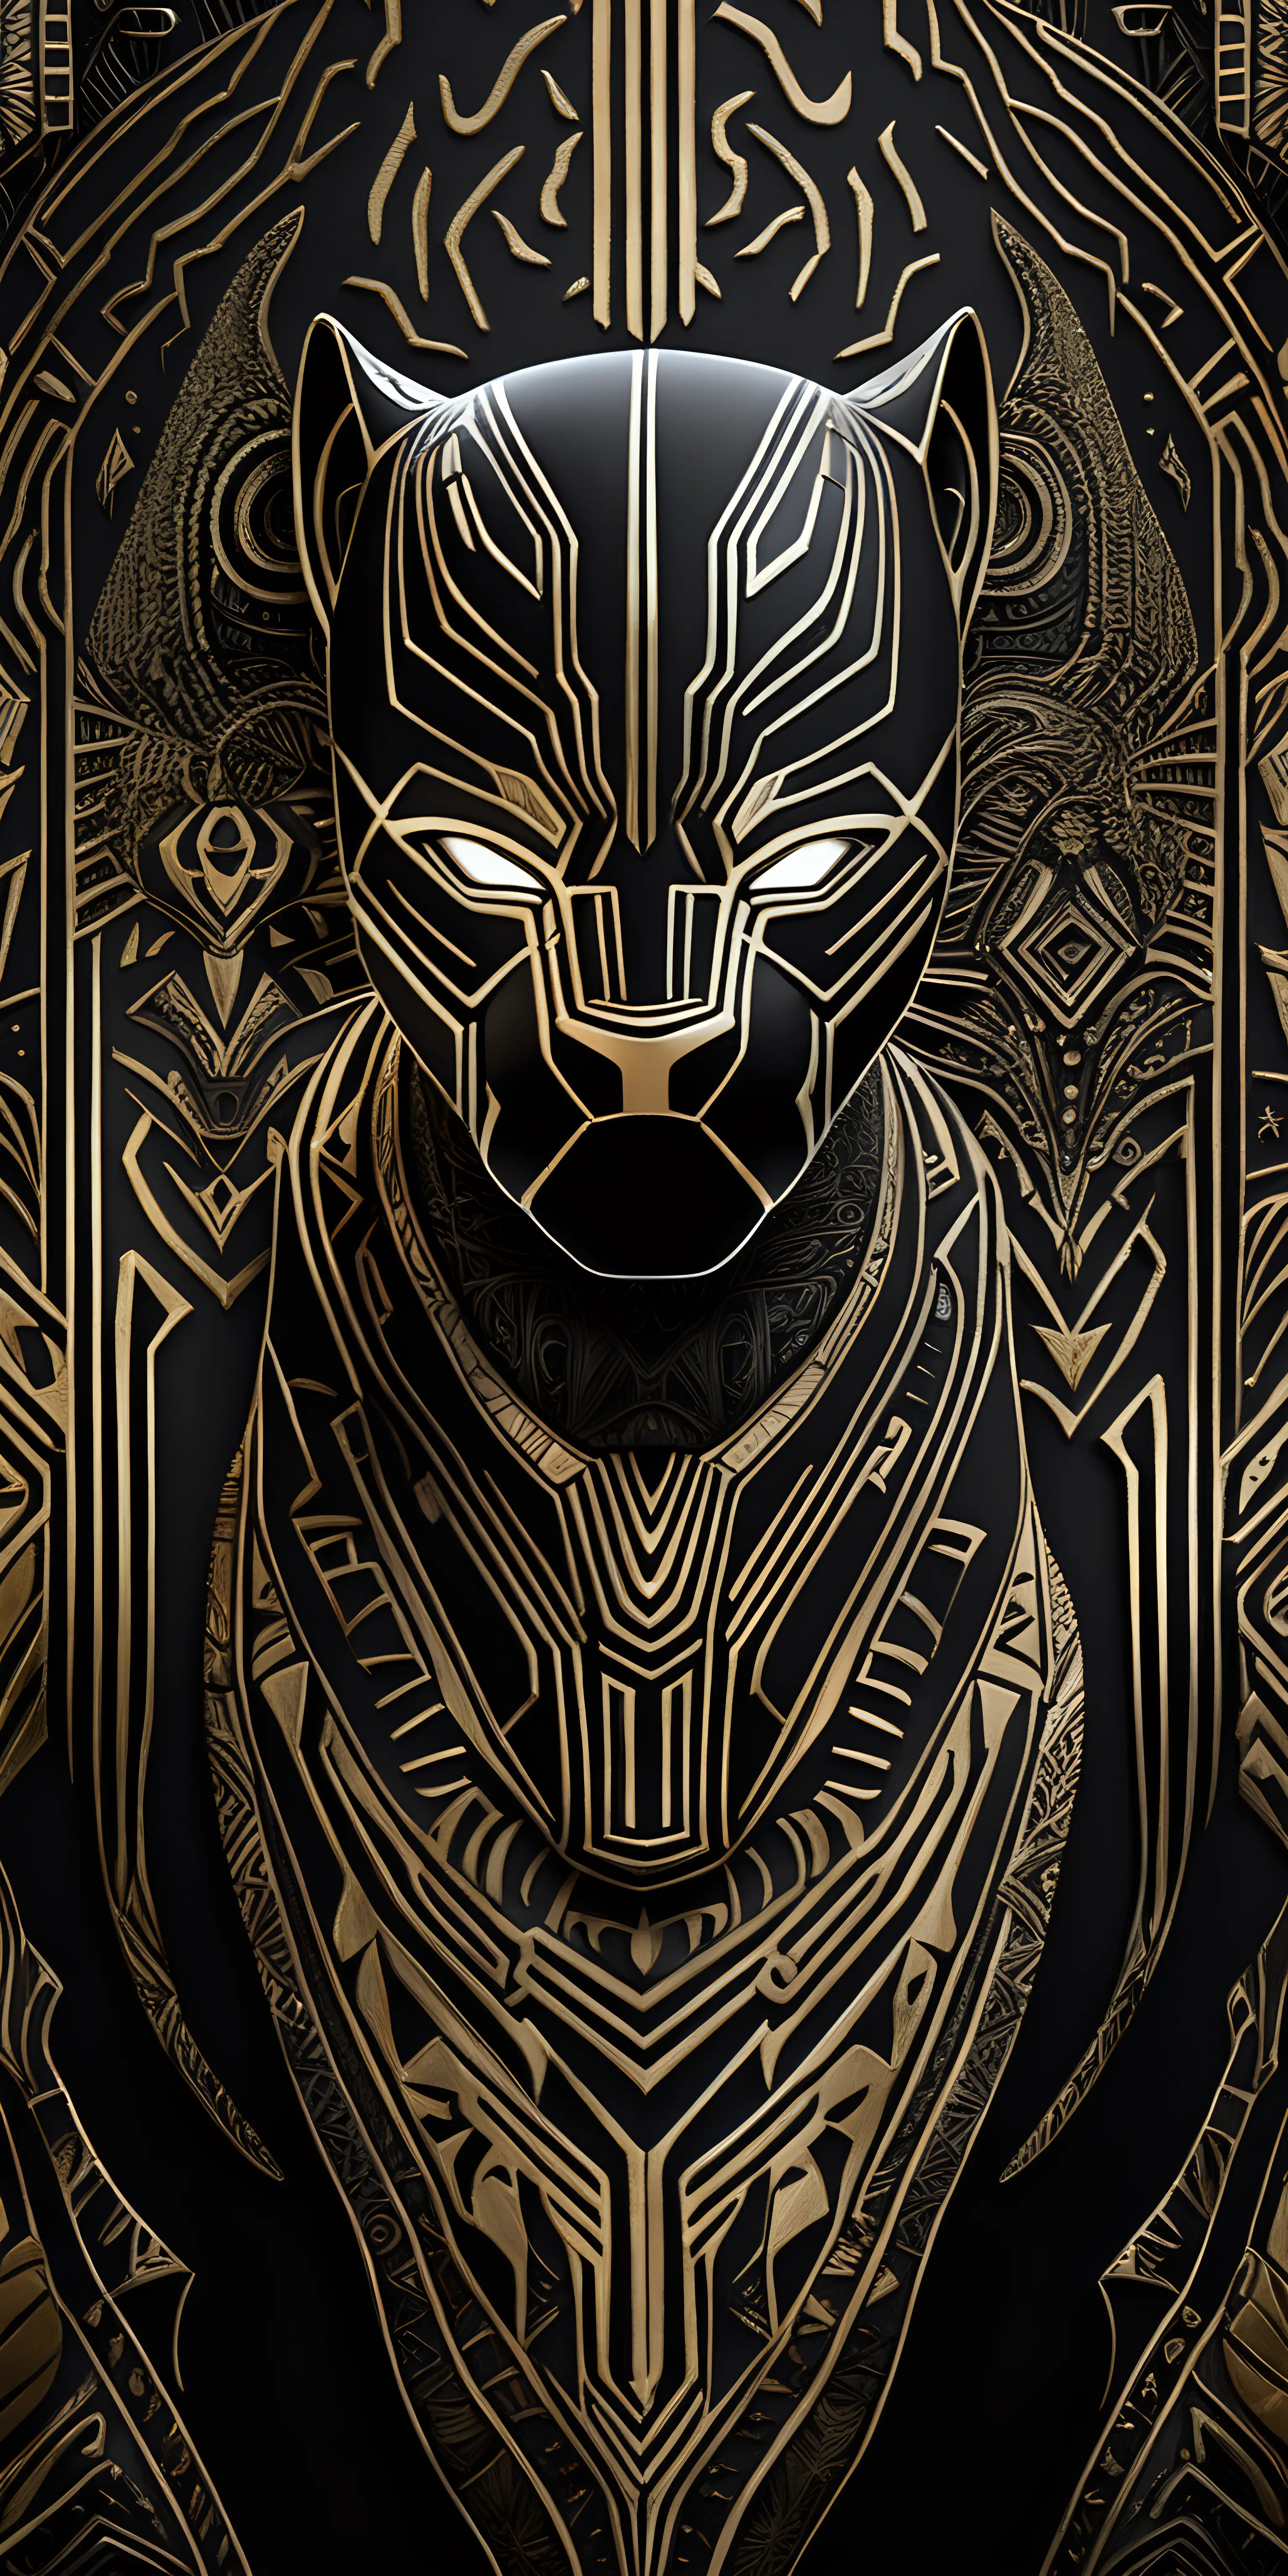 Wakandan Black Panther Abstract Wallpaper with Gold Royal Theme